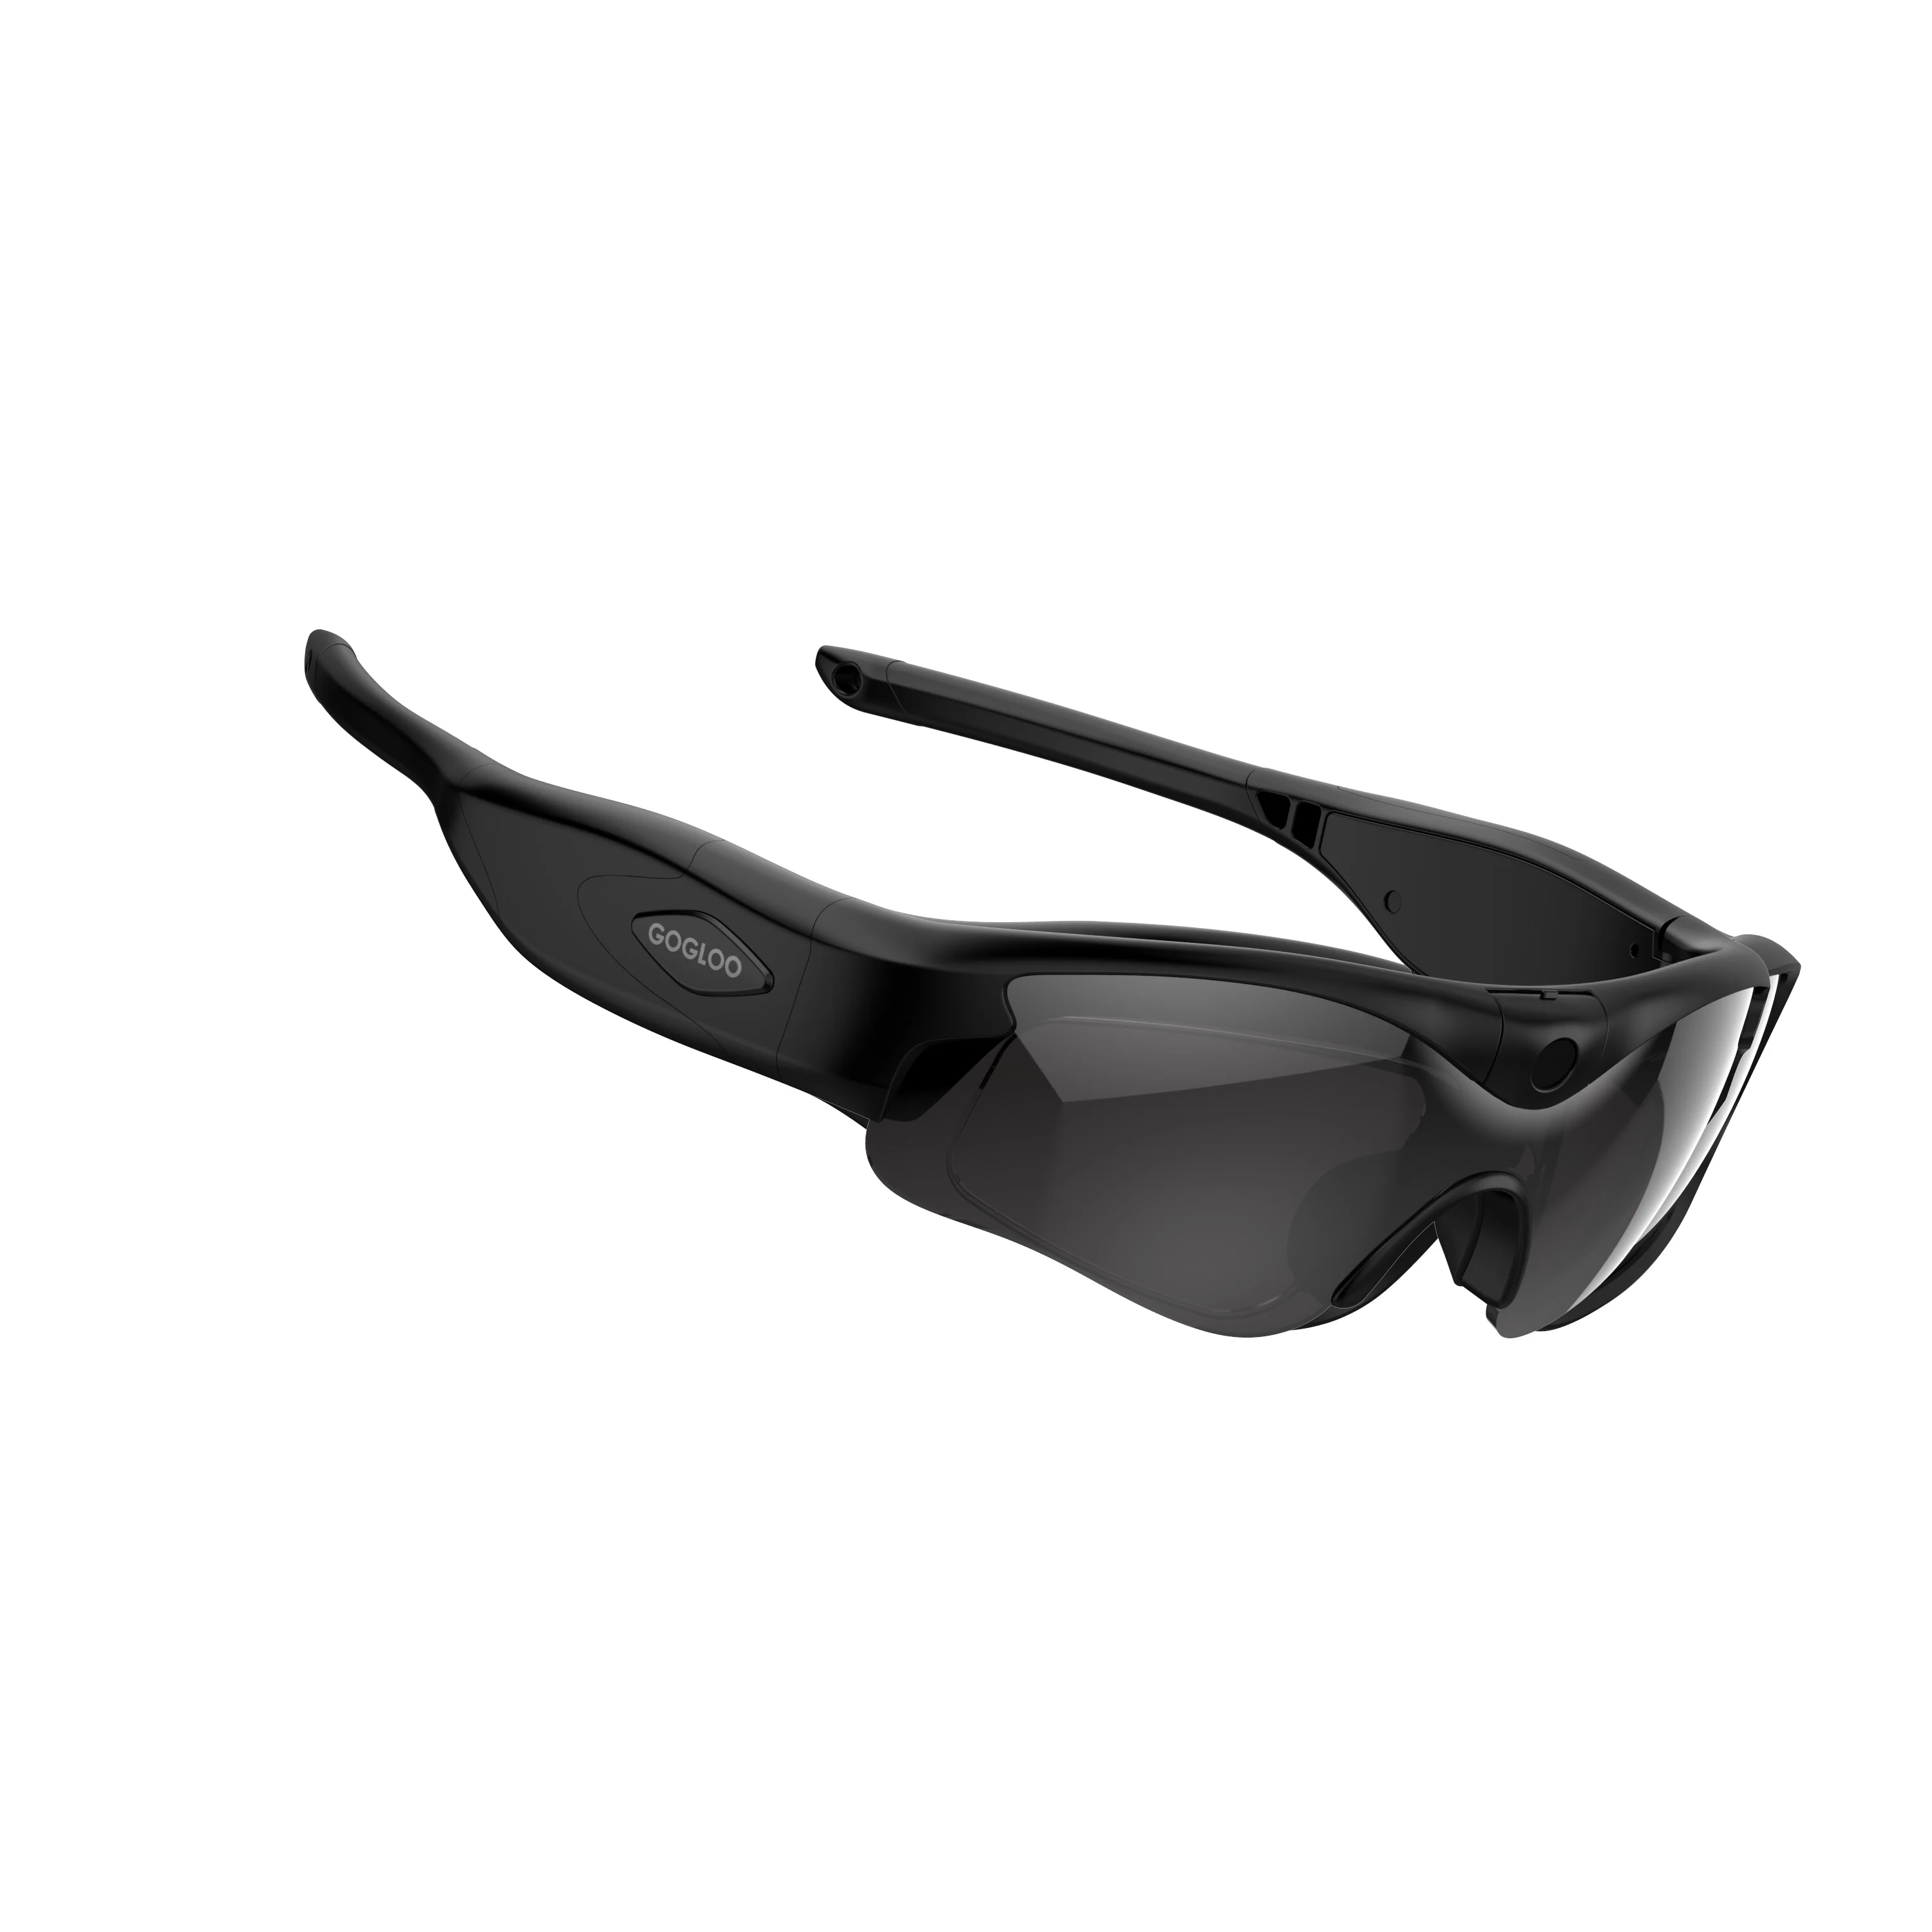 

Gogloo E7P 1080P HD Camera Glasses Wifi Smart Sport Sunglasses DVR Eyewear Ce ROHS Camera Function without Screen Microsd FCC